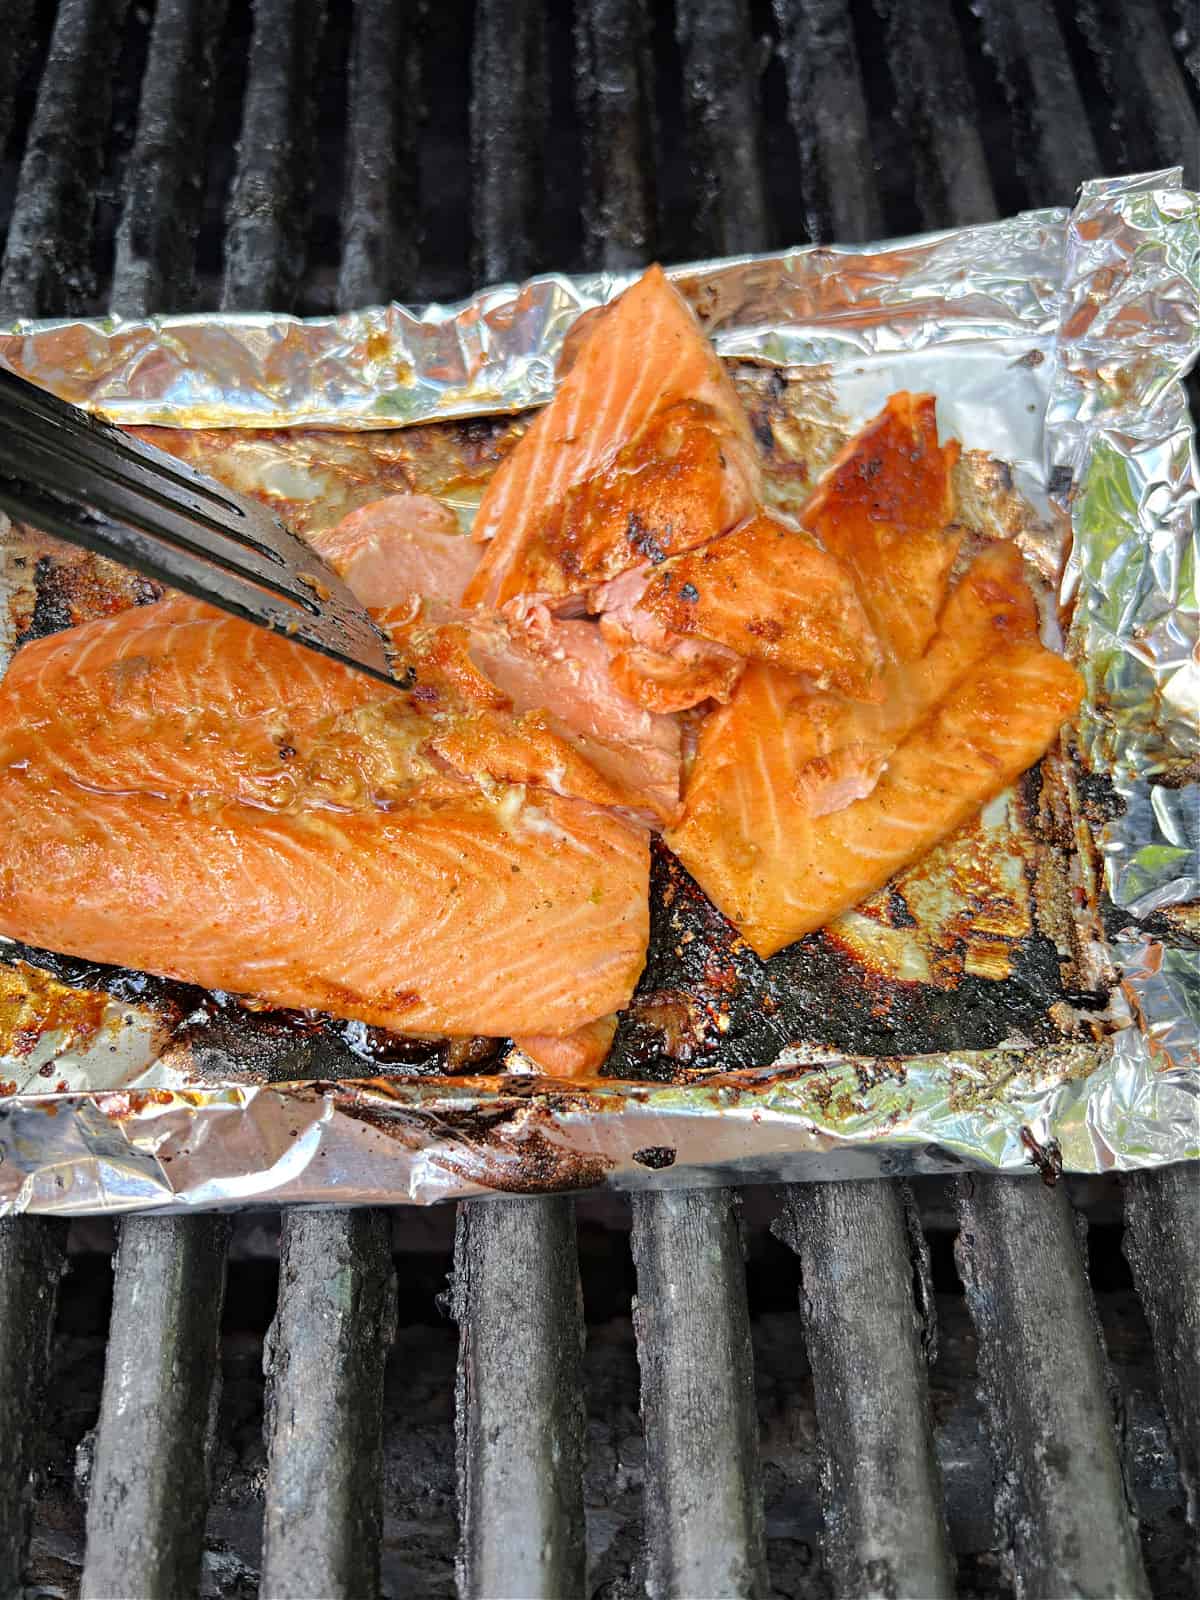 spatula pushing on cooked salmon, causing it to flake apart.